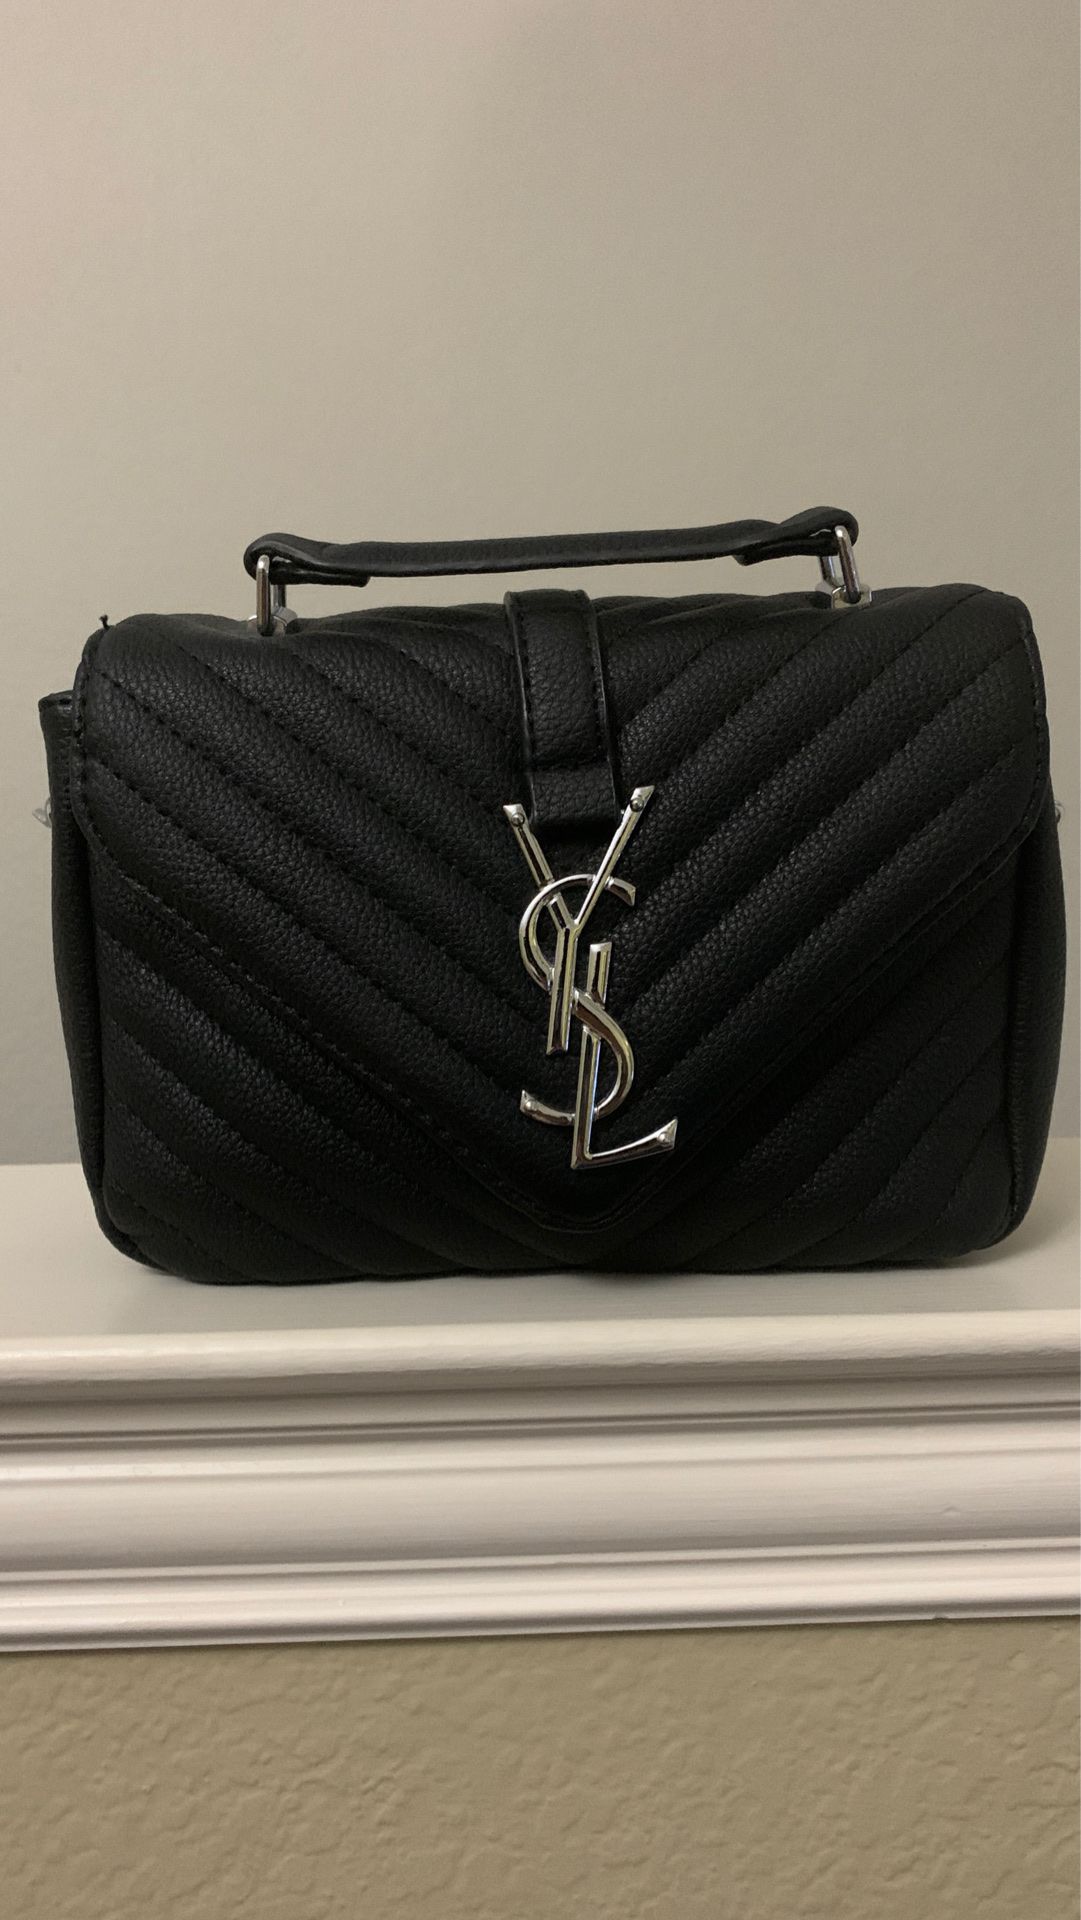 YSL Handbag - Black & Silver